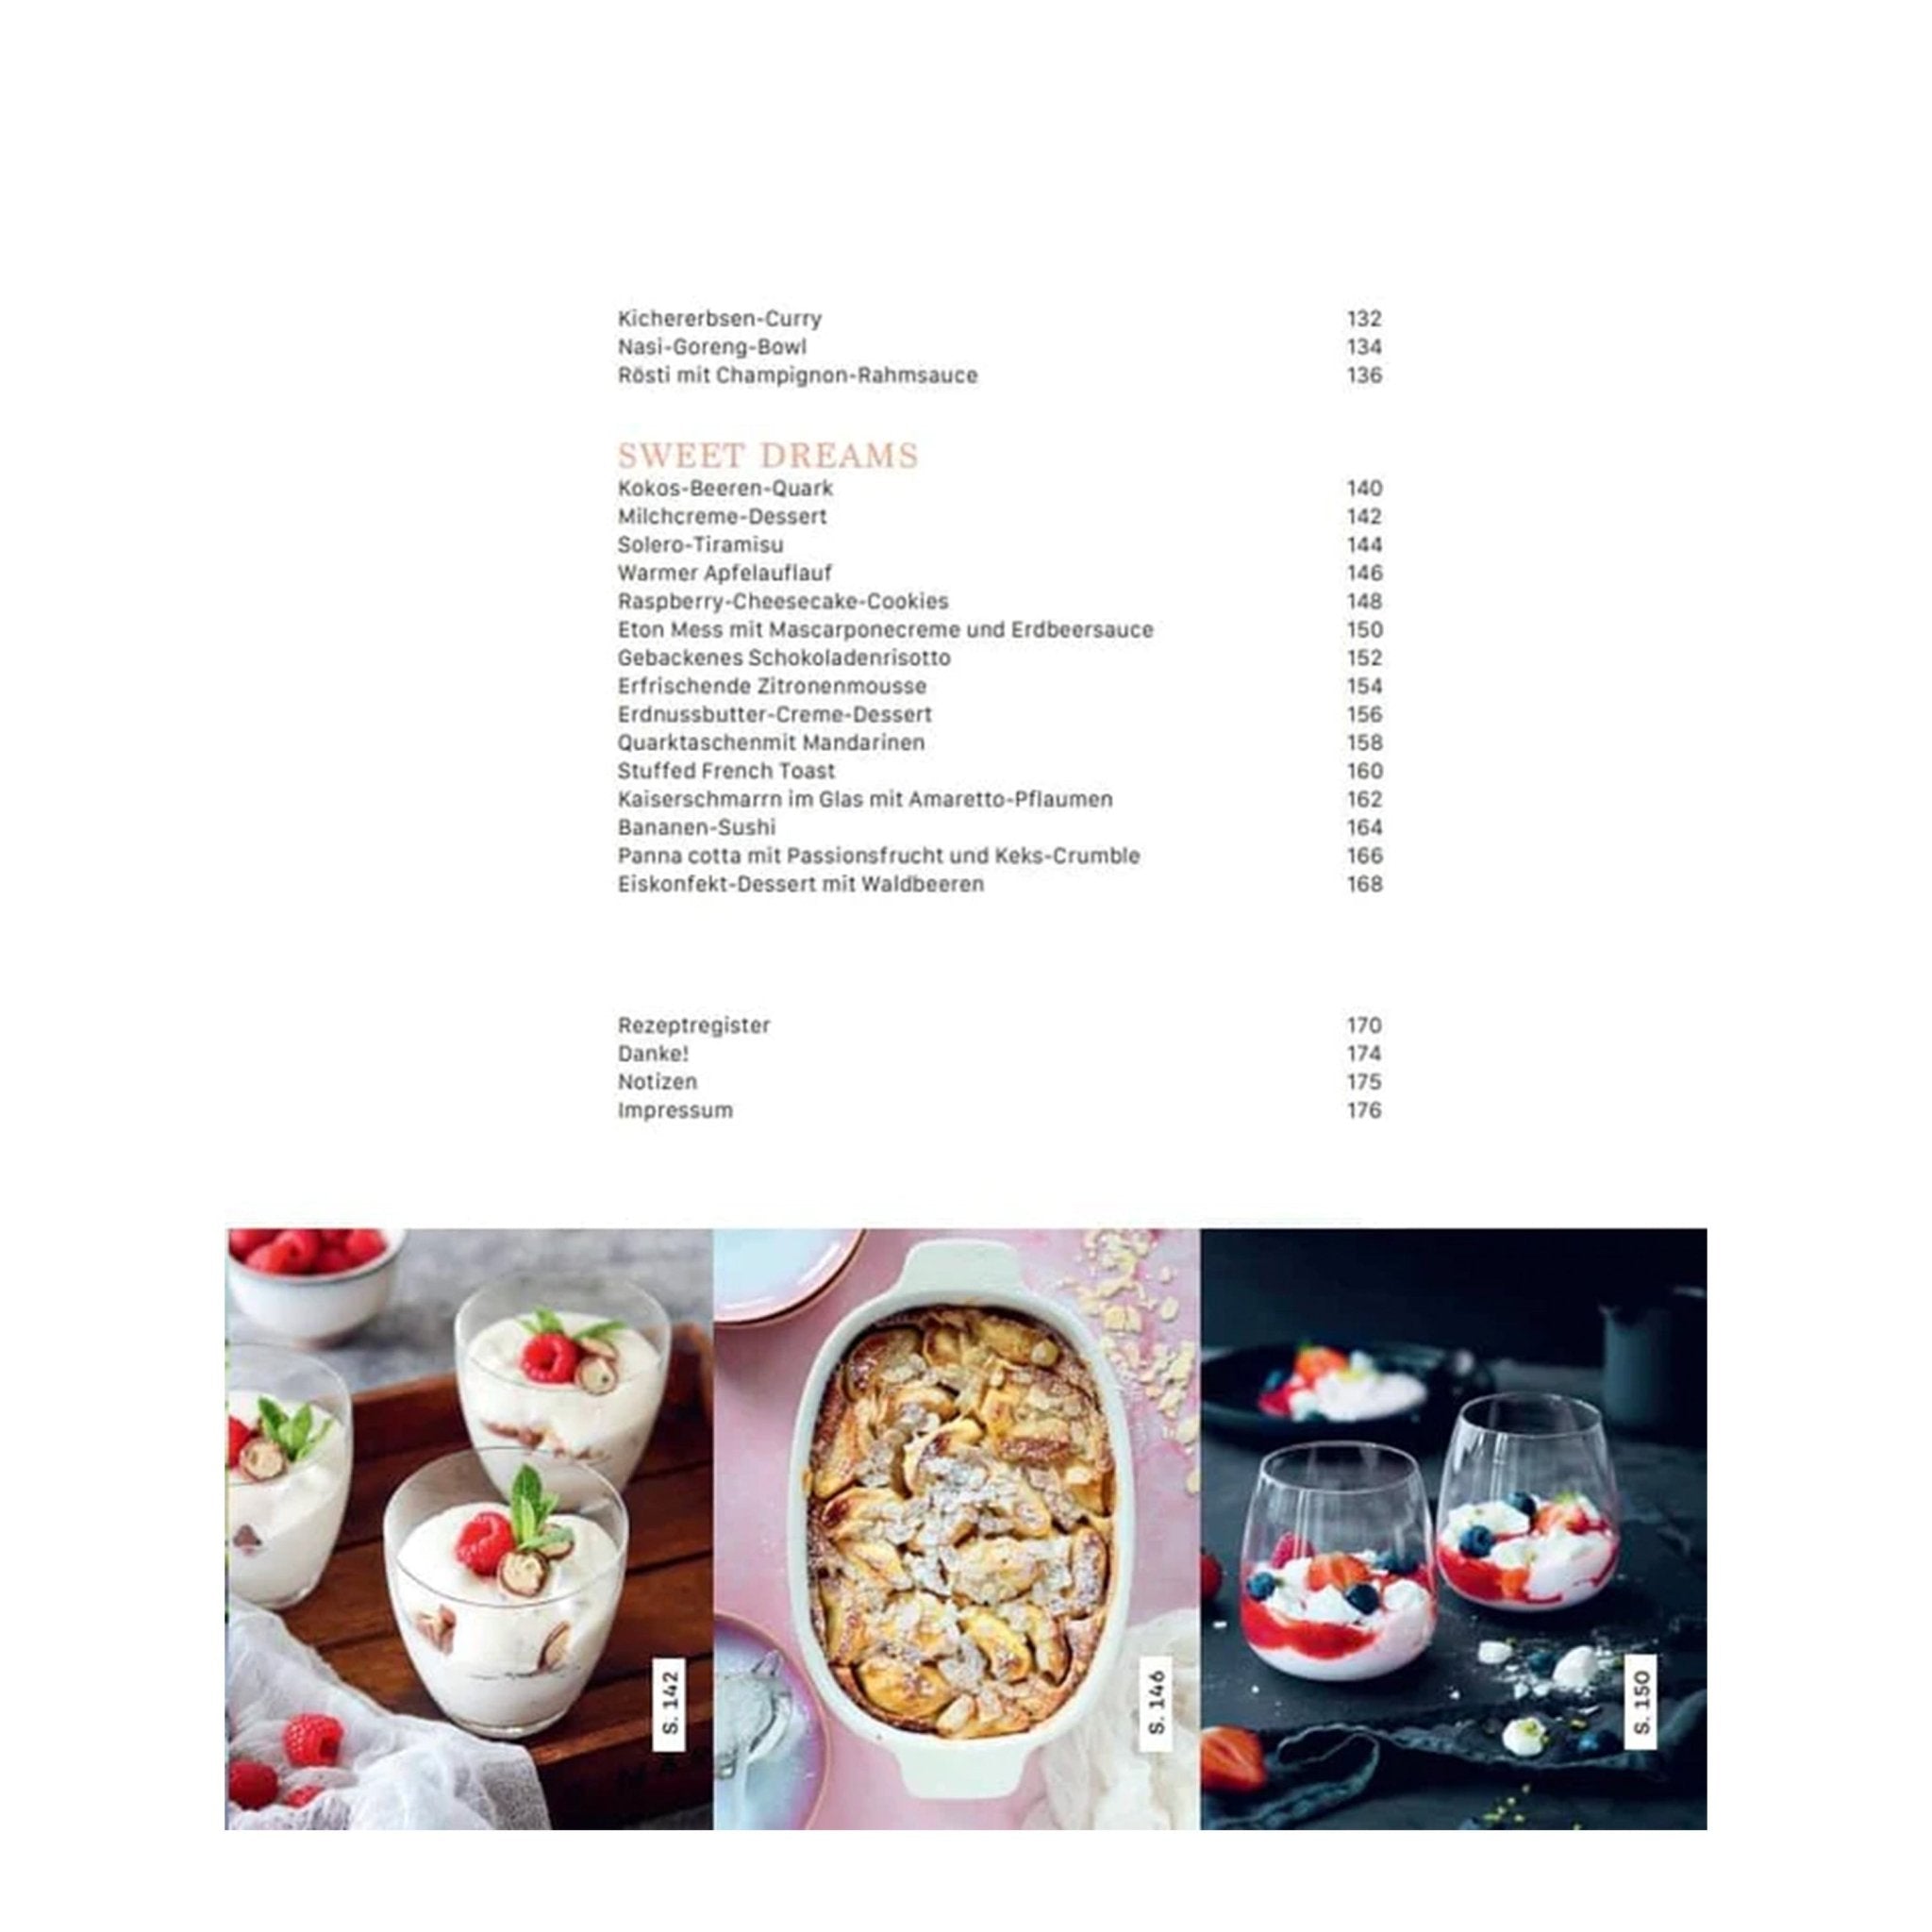 Eat & Love  Unsere Jeden-Tag-Küche mit Herz - Wundermix GmbH